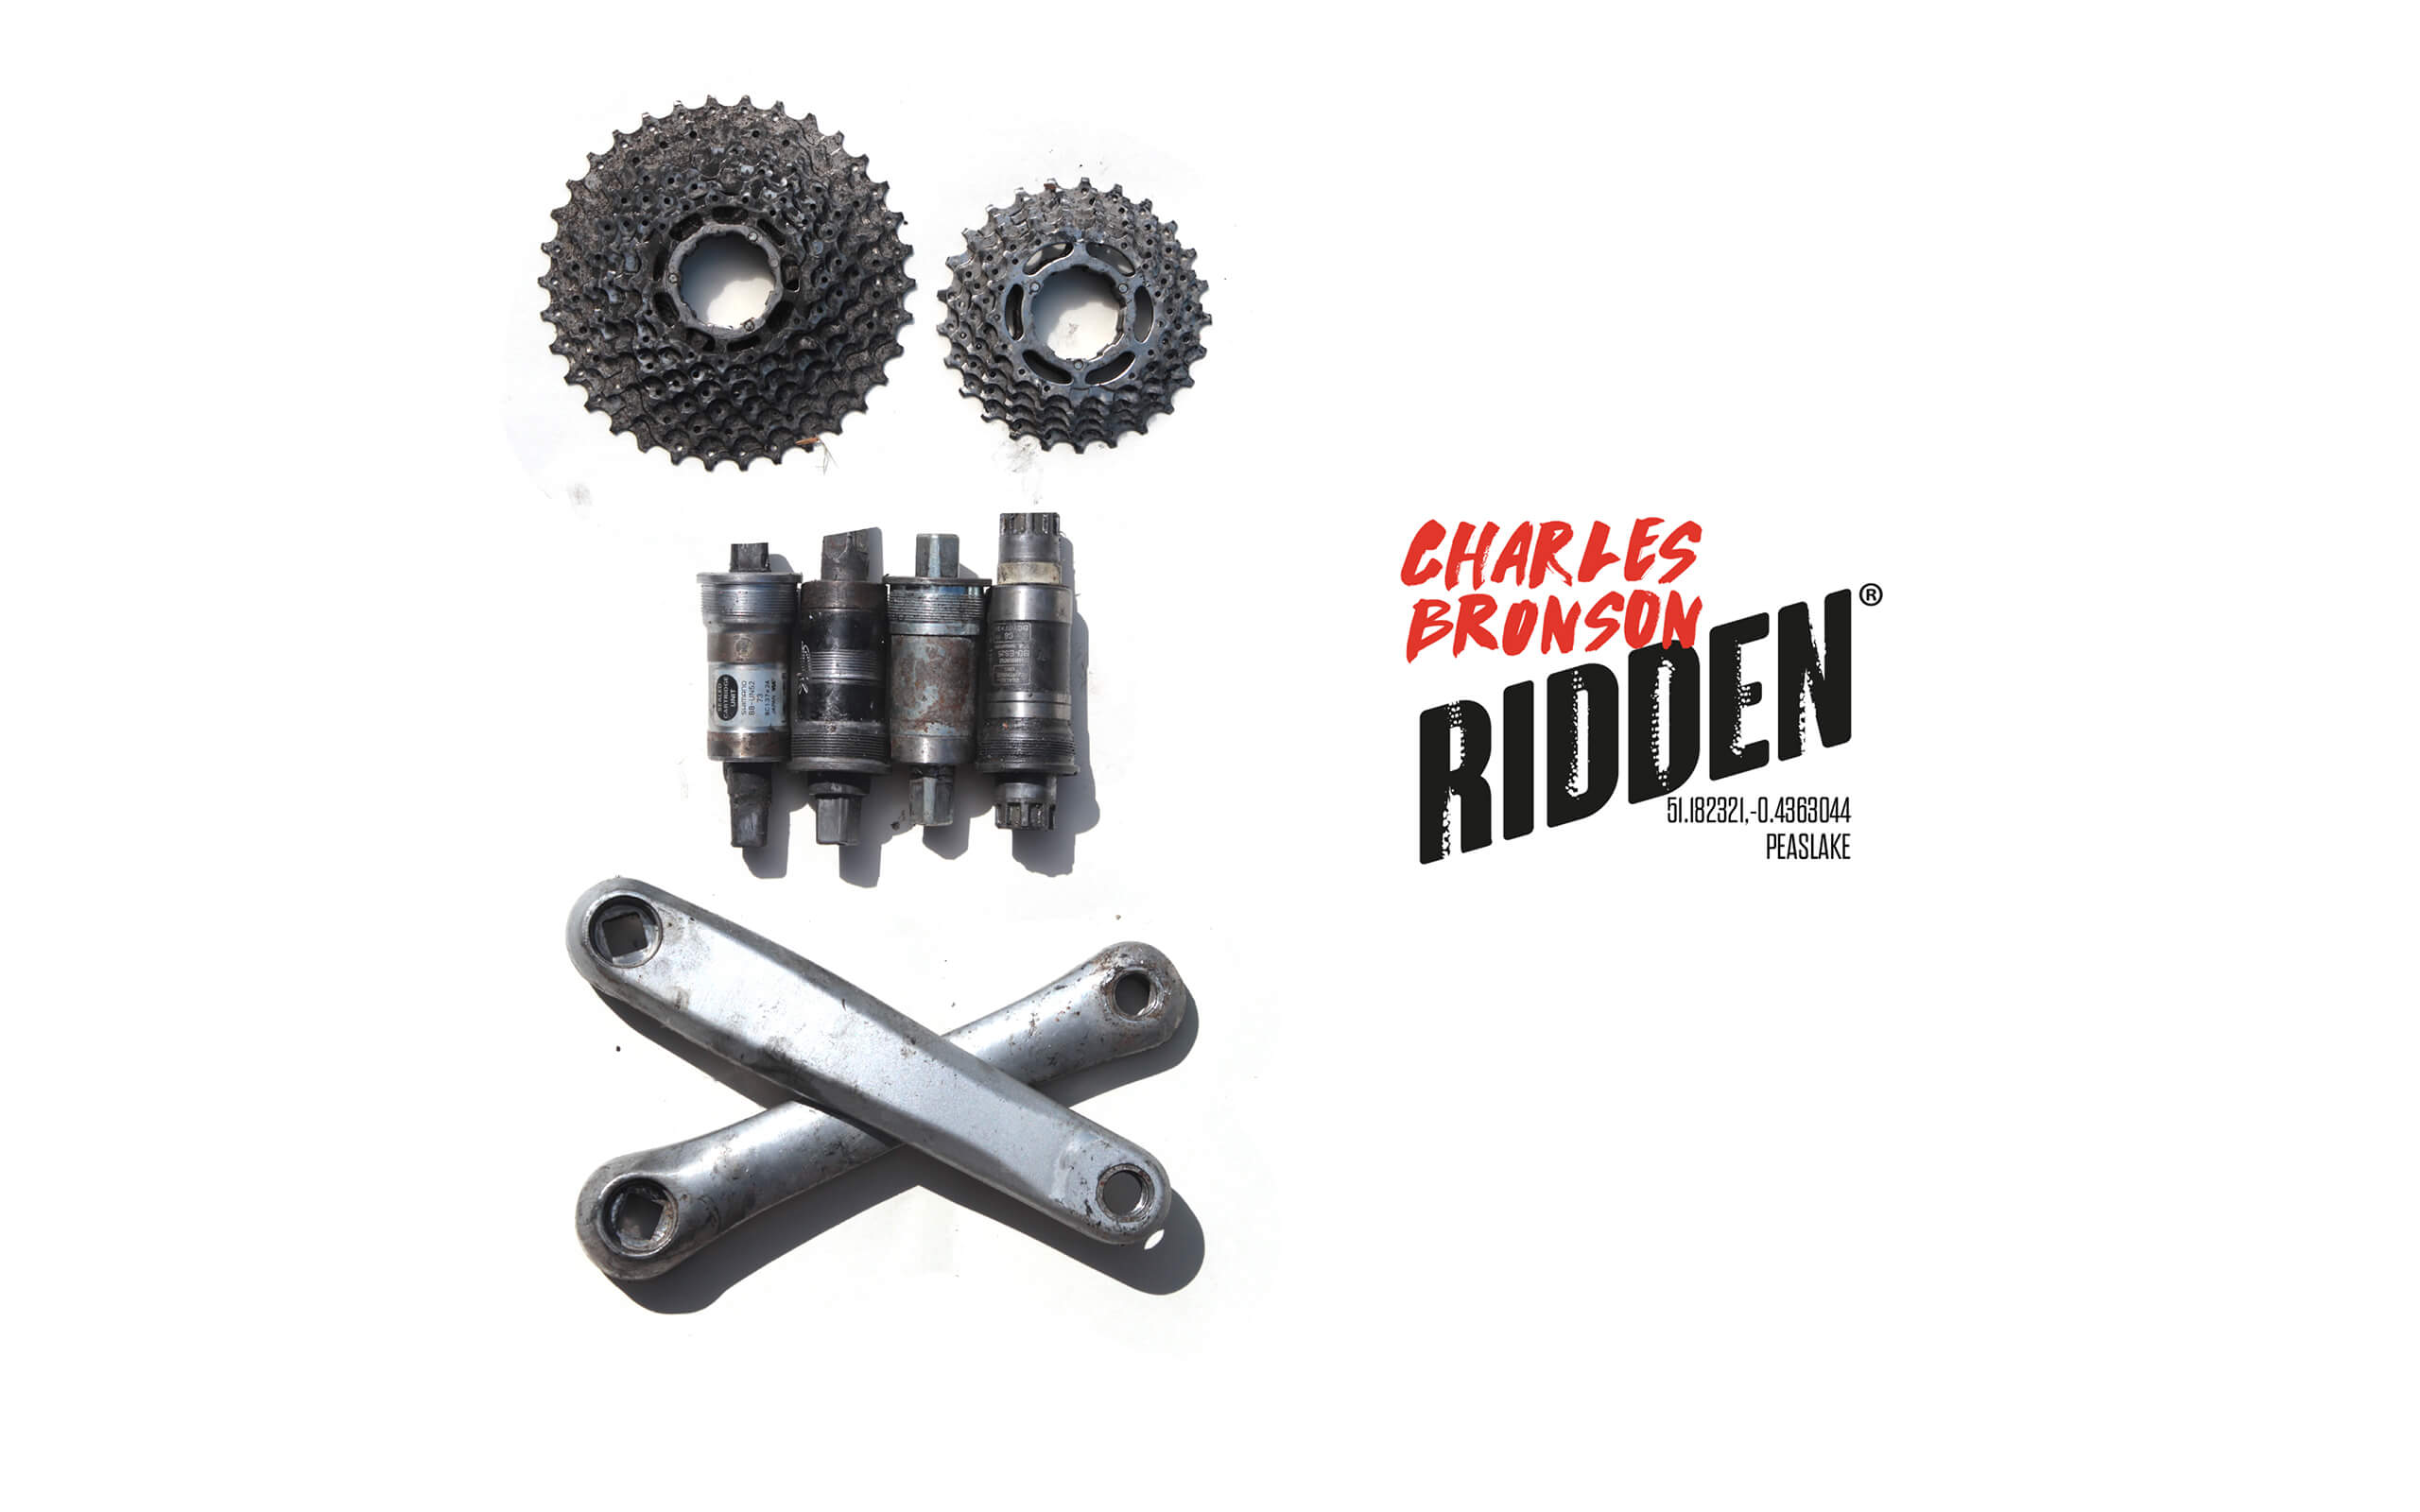 Ridden bike part poster design